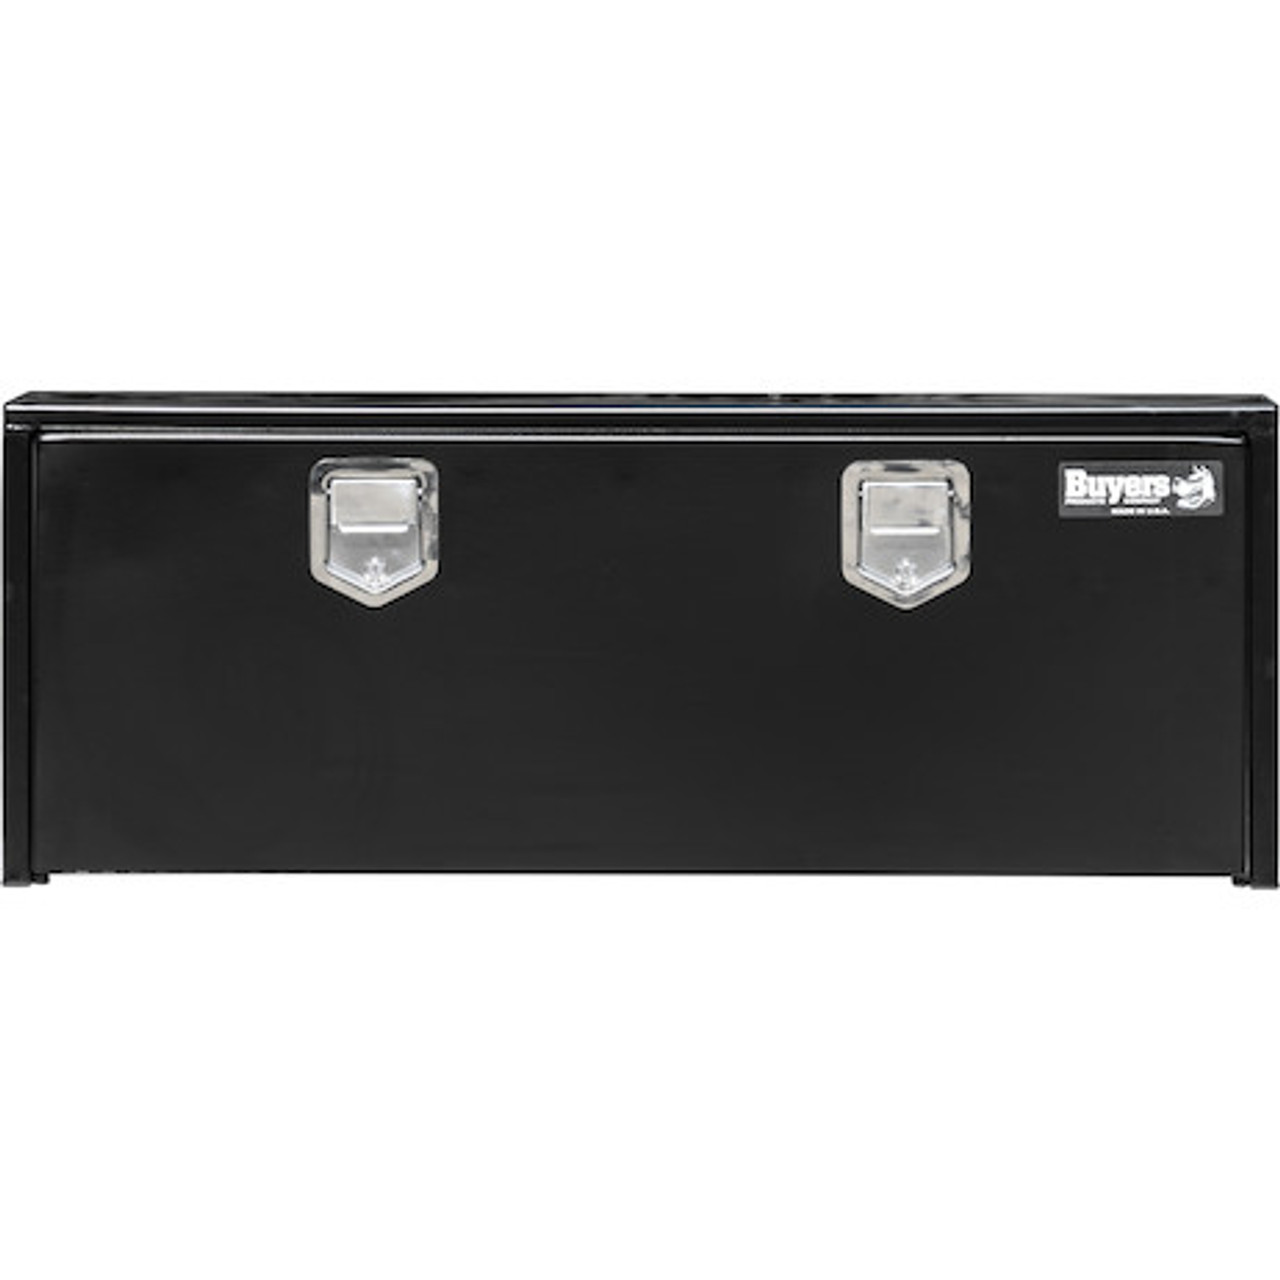 1702110 - 18x18x48 Inch Black Steel Underbody Truck Box With Paddle Latch